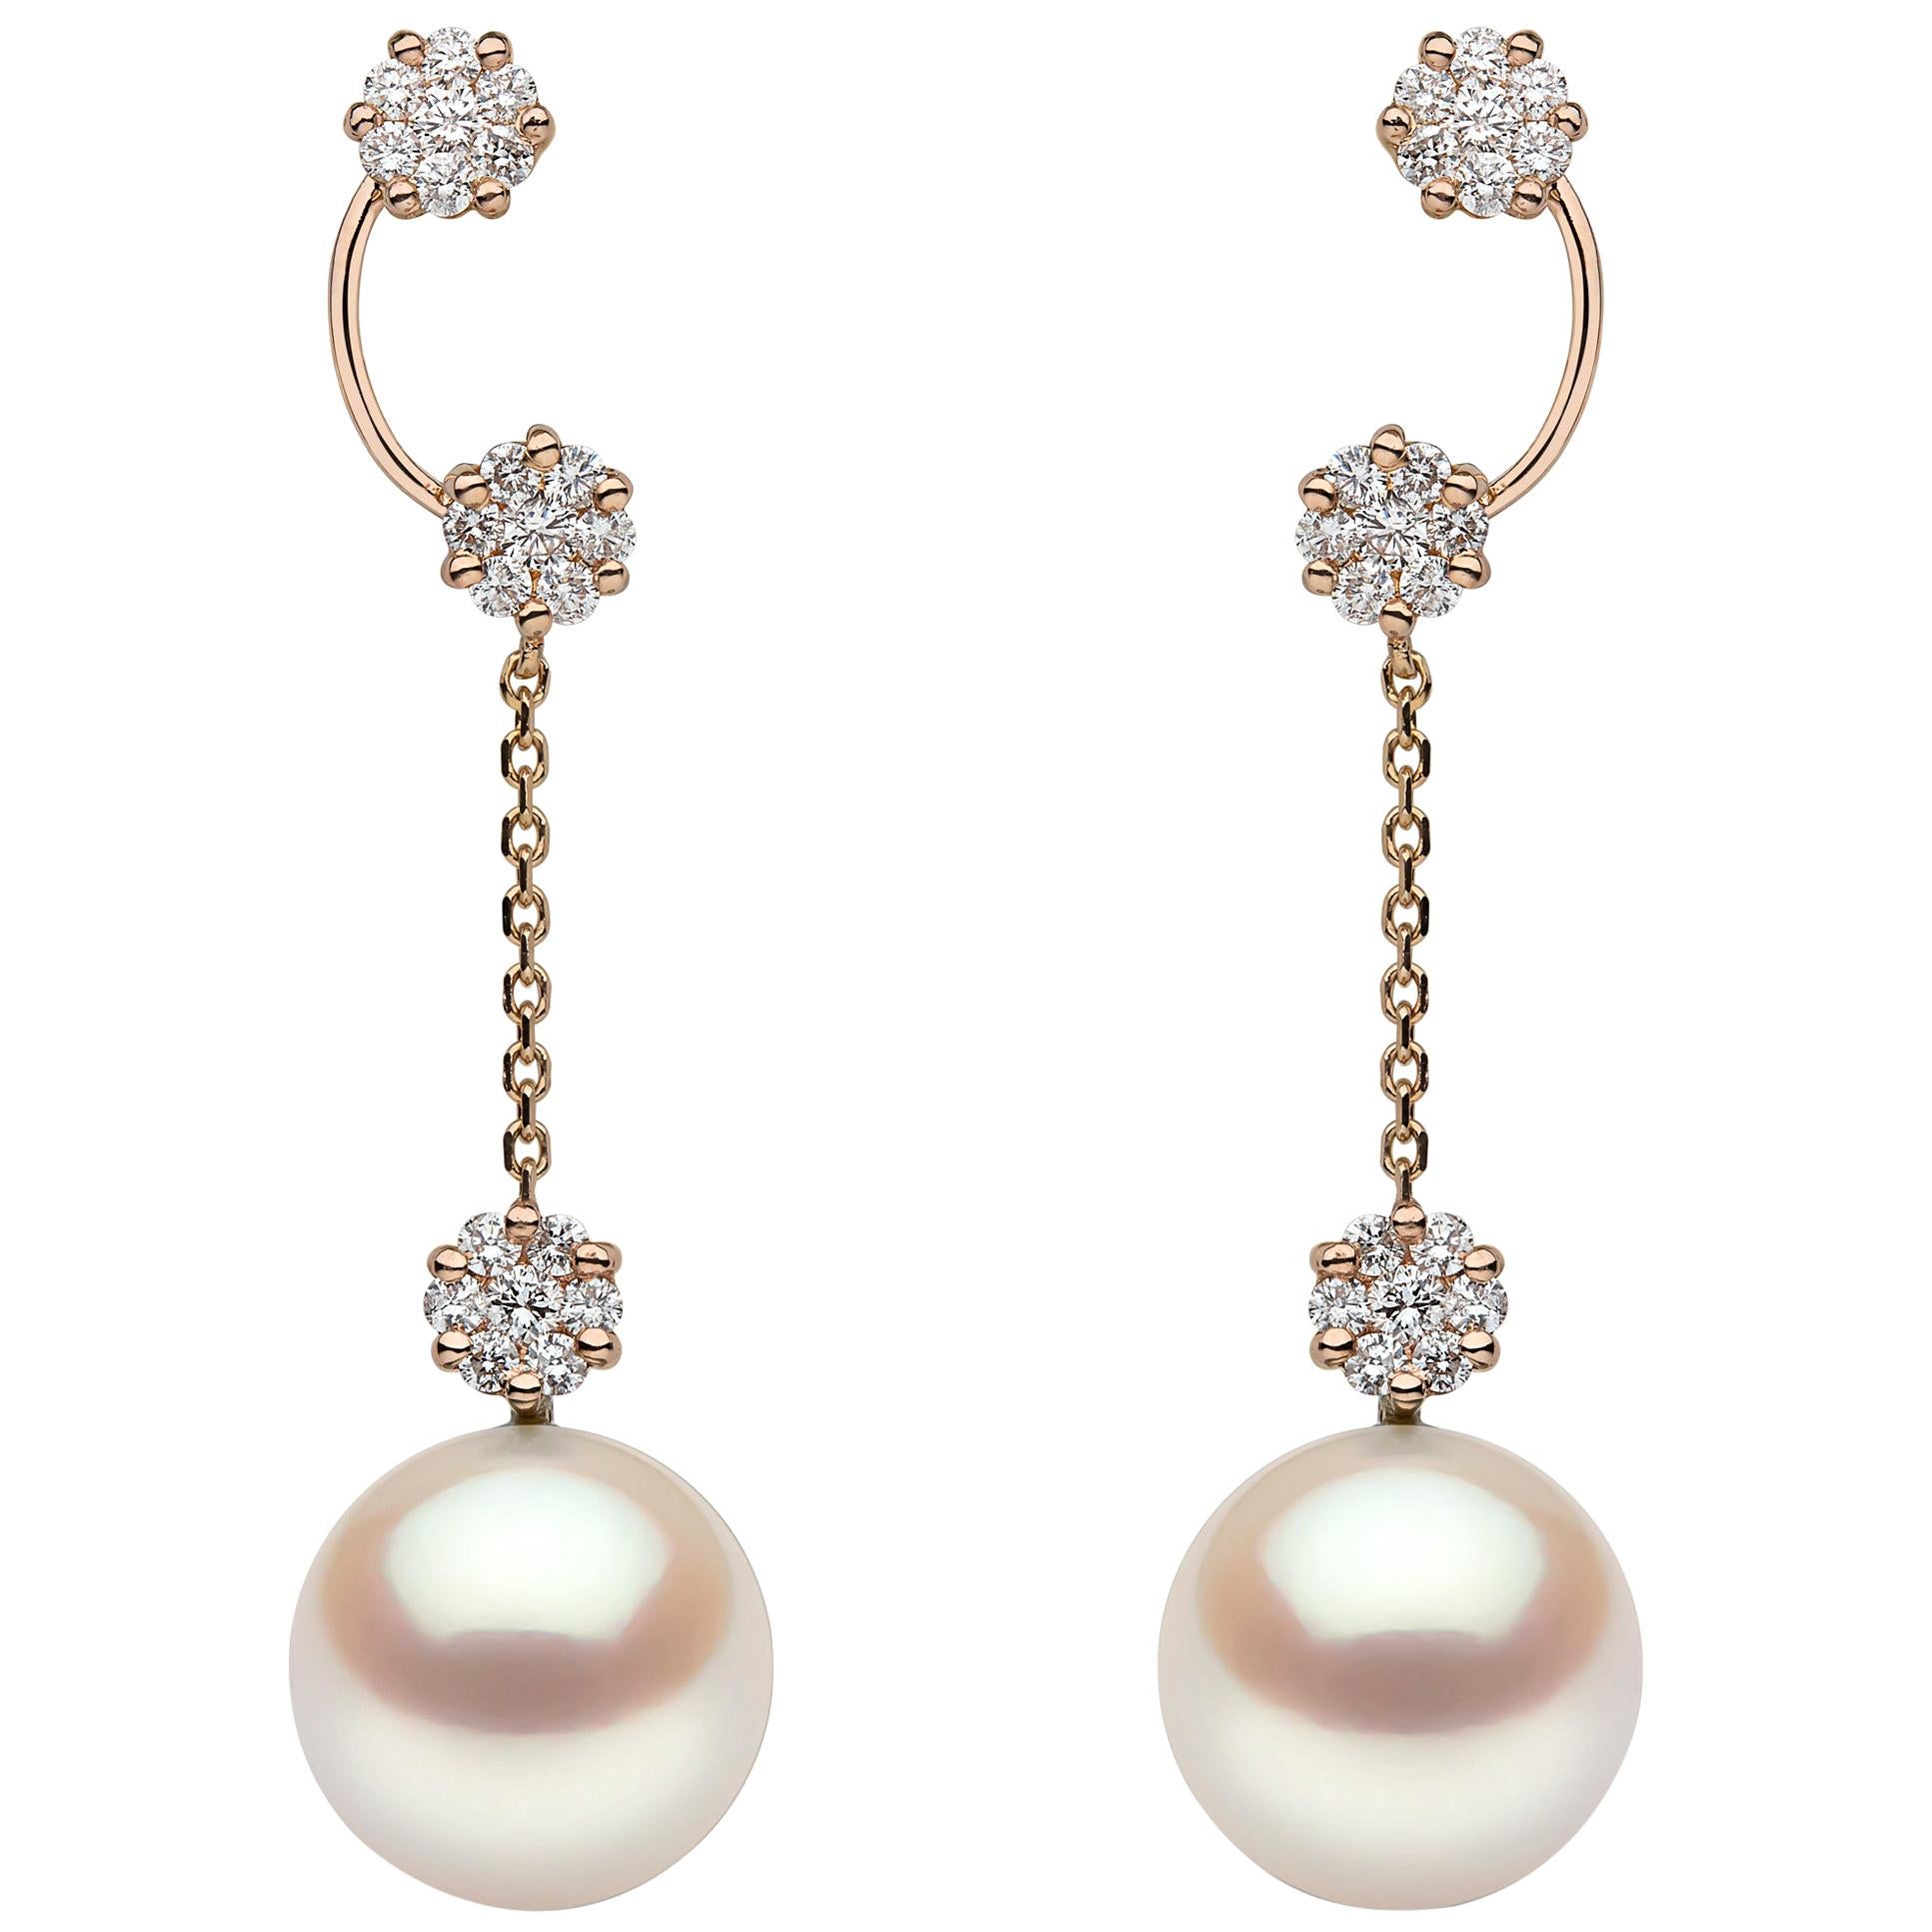 Yoko London Pearl and Diamond Chain Earrings in 18 Karat Rose Gold